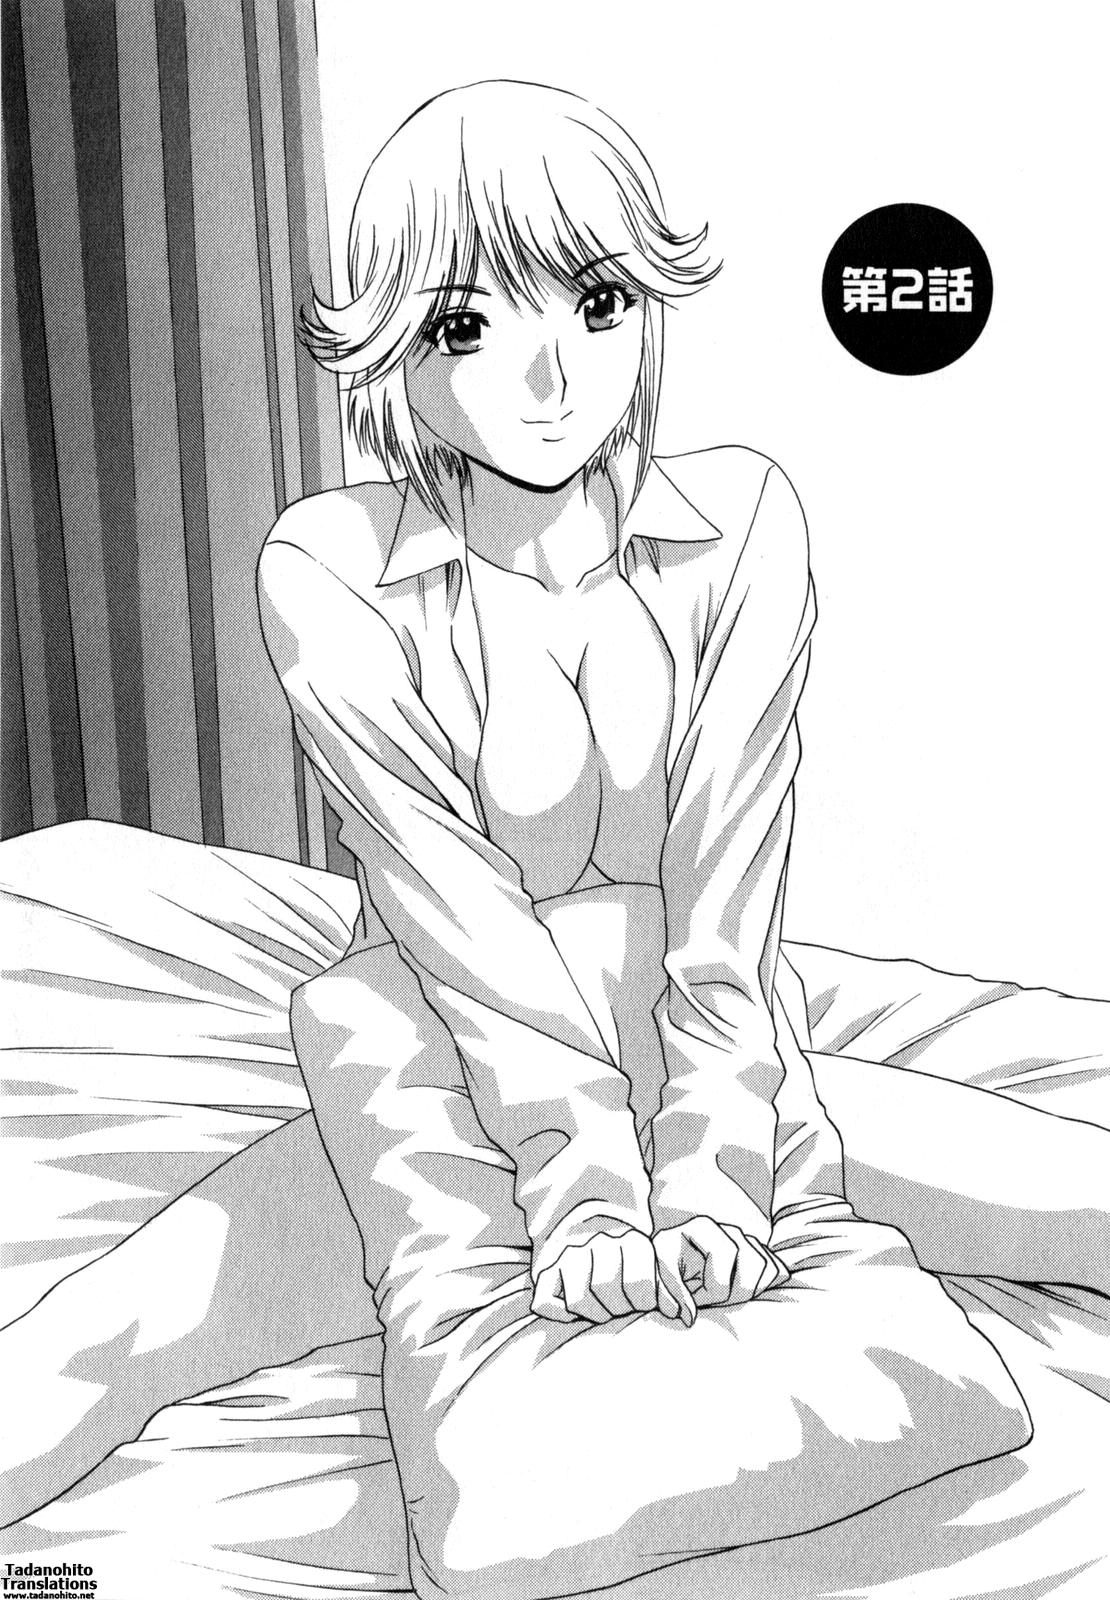 [Hidemaru] Life with Married Women Just Like a Manga 1 - Ch. 1-8 [English] {Tadanohito} 26